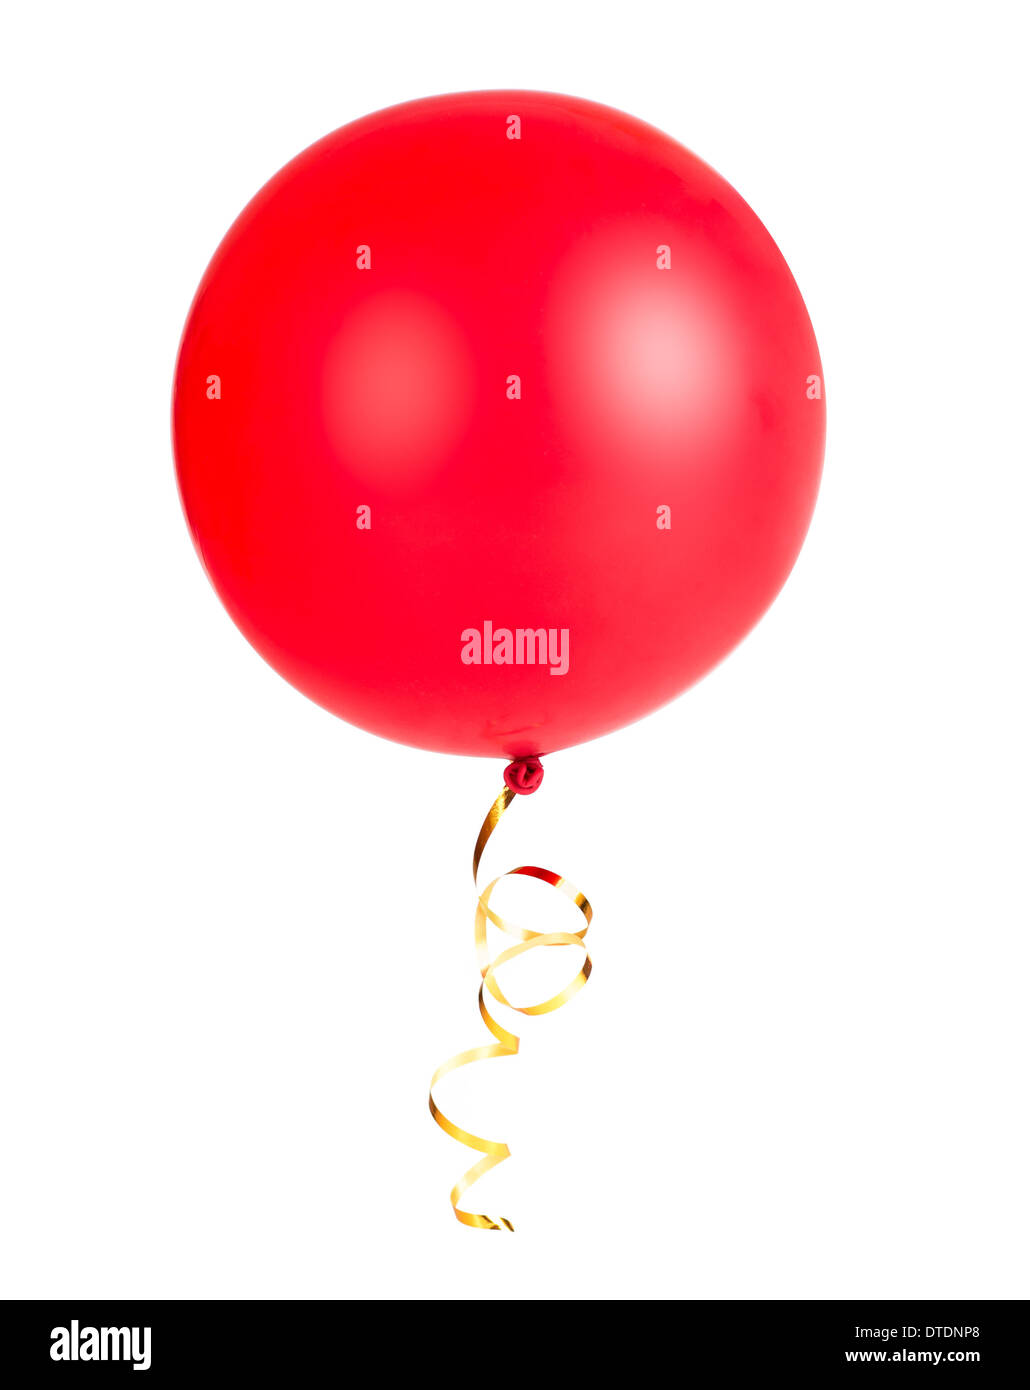 Red Ribbon Ballon Foto mit gold String isoliert auf weiss Stockfoto